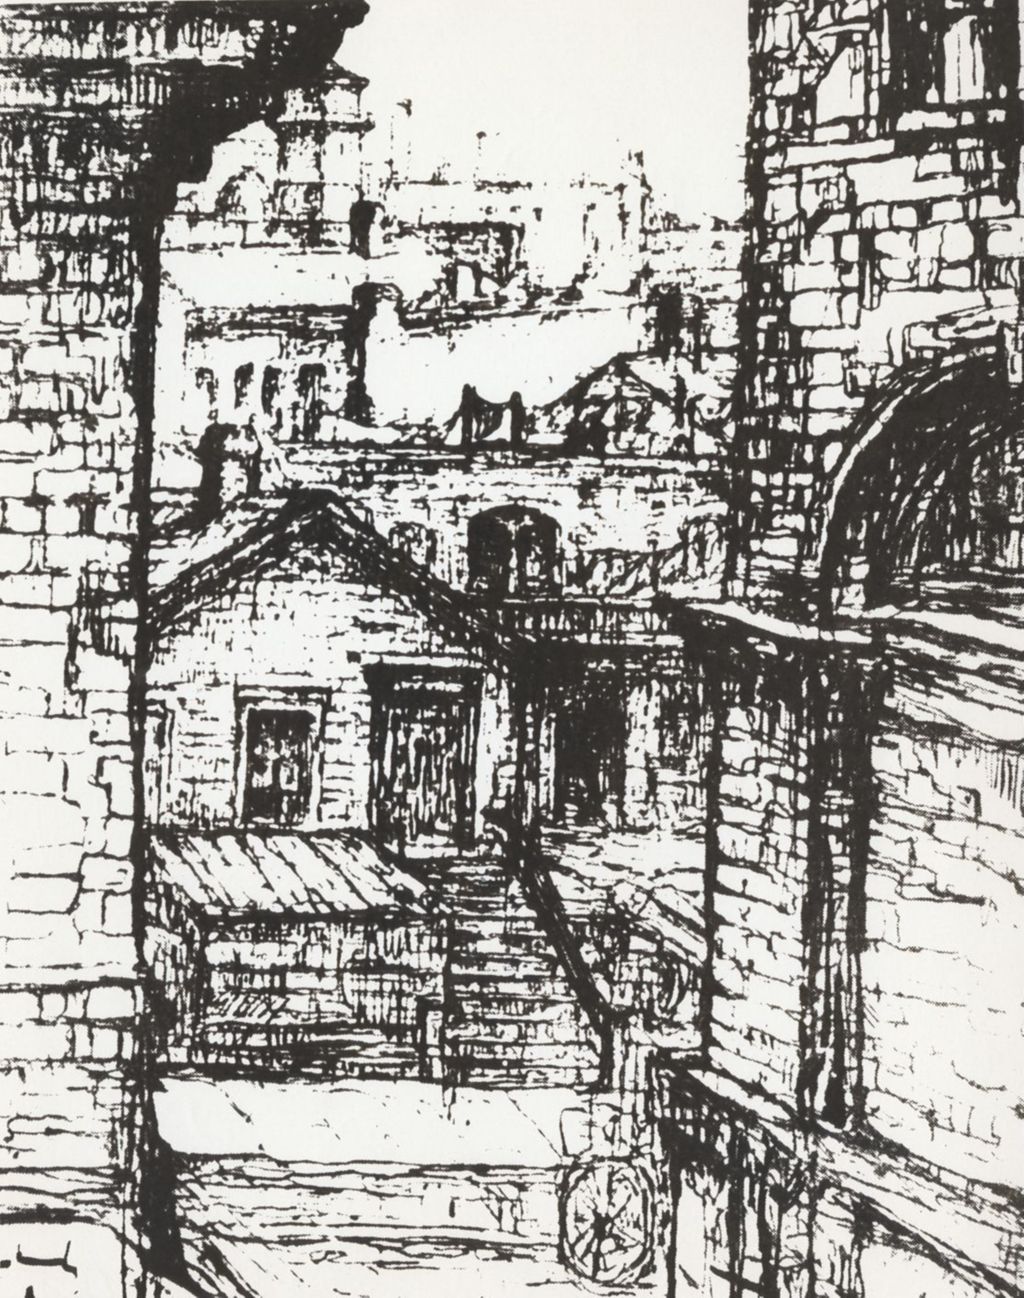 Norah Hamilton drawing "A View between Hull-House Gymnasium and Theater"